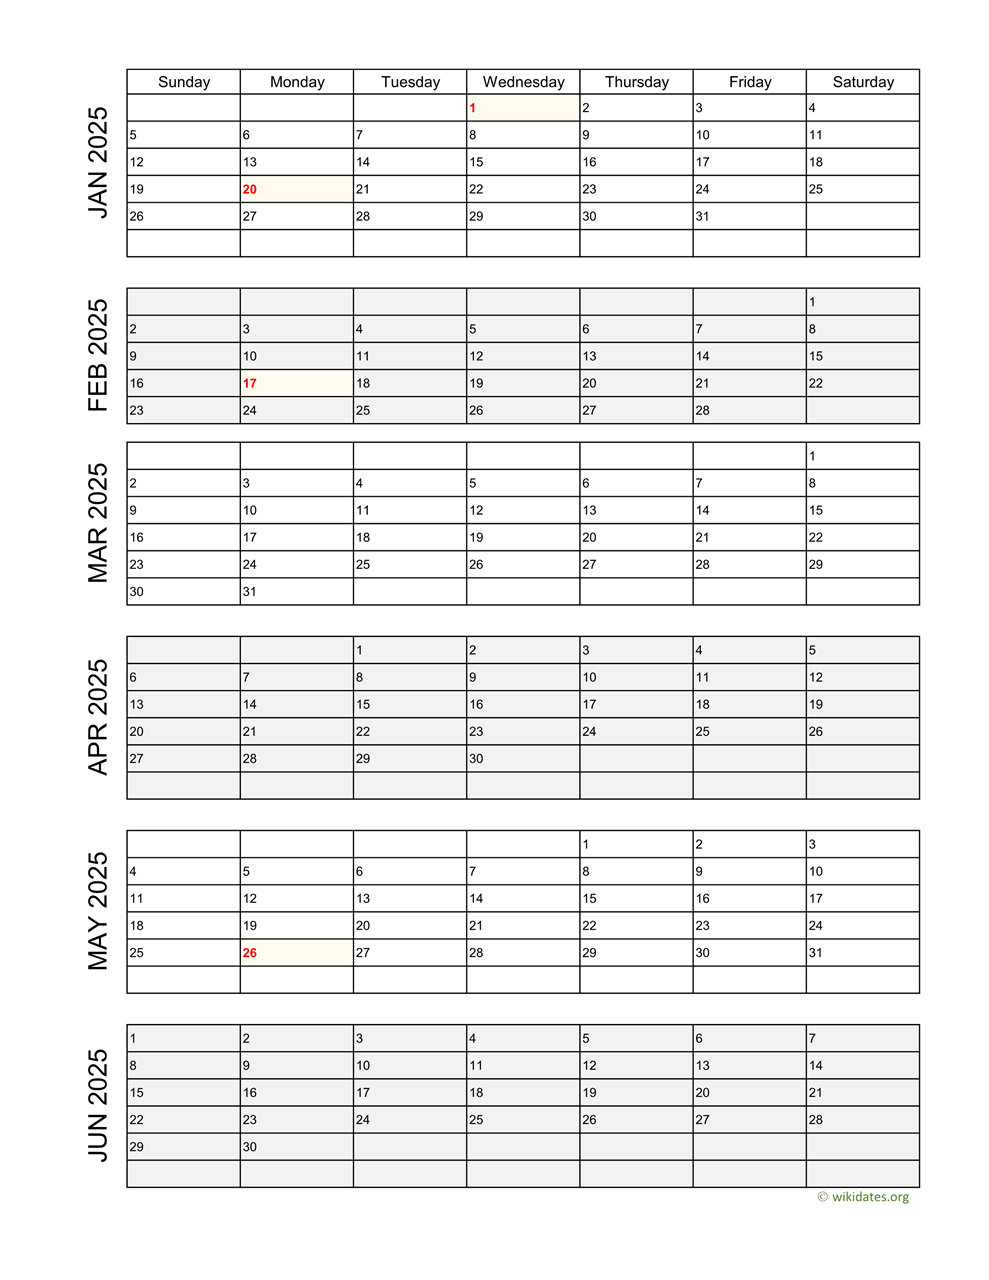 Printable 2025 Calendar WikiDates